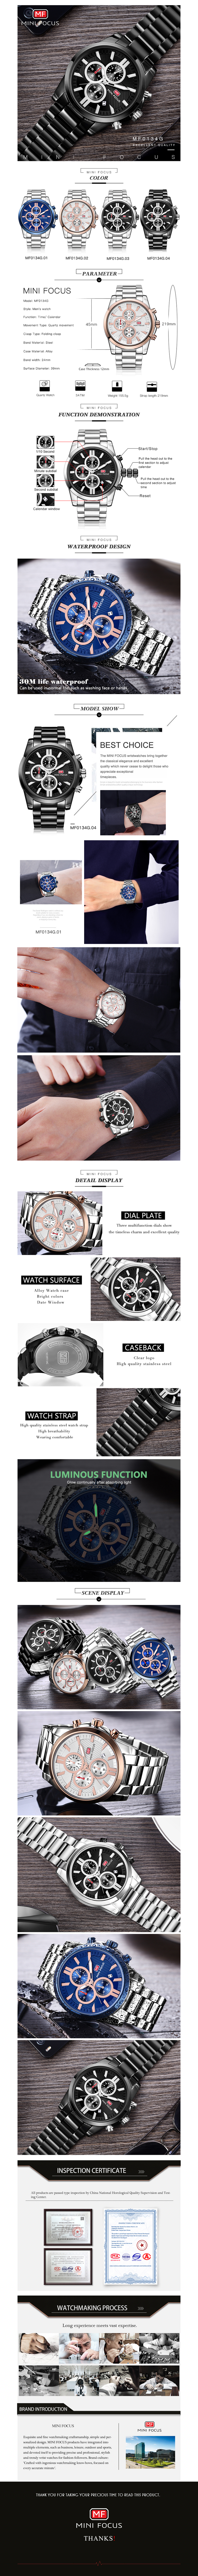 MINI FOCUS Sports Top Brand Luxury Men Business Stainless Steel Quartz Watch